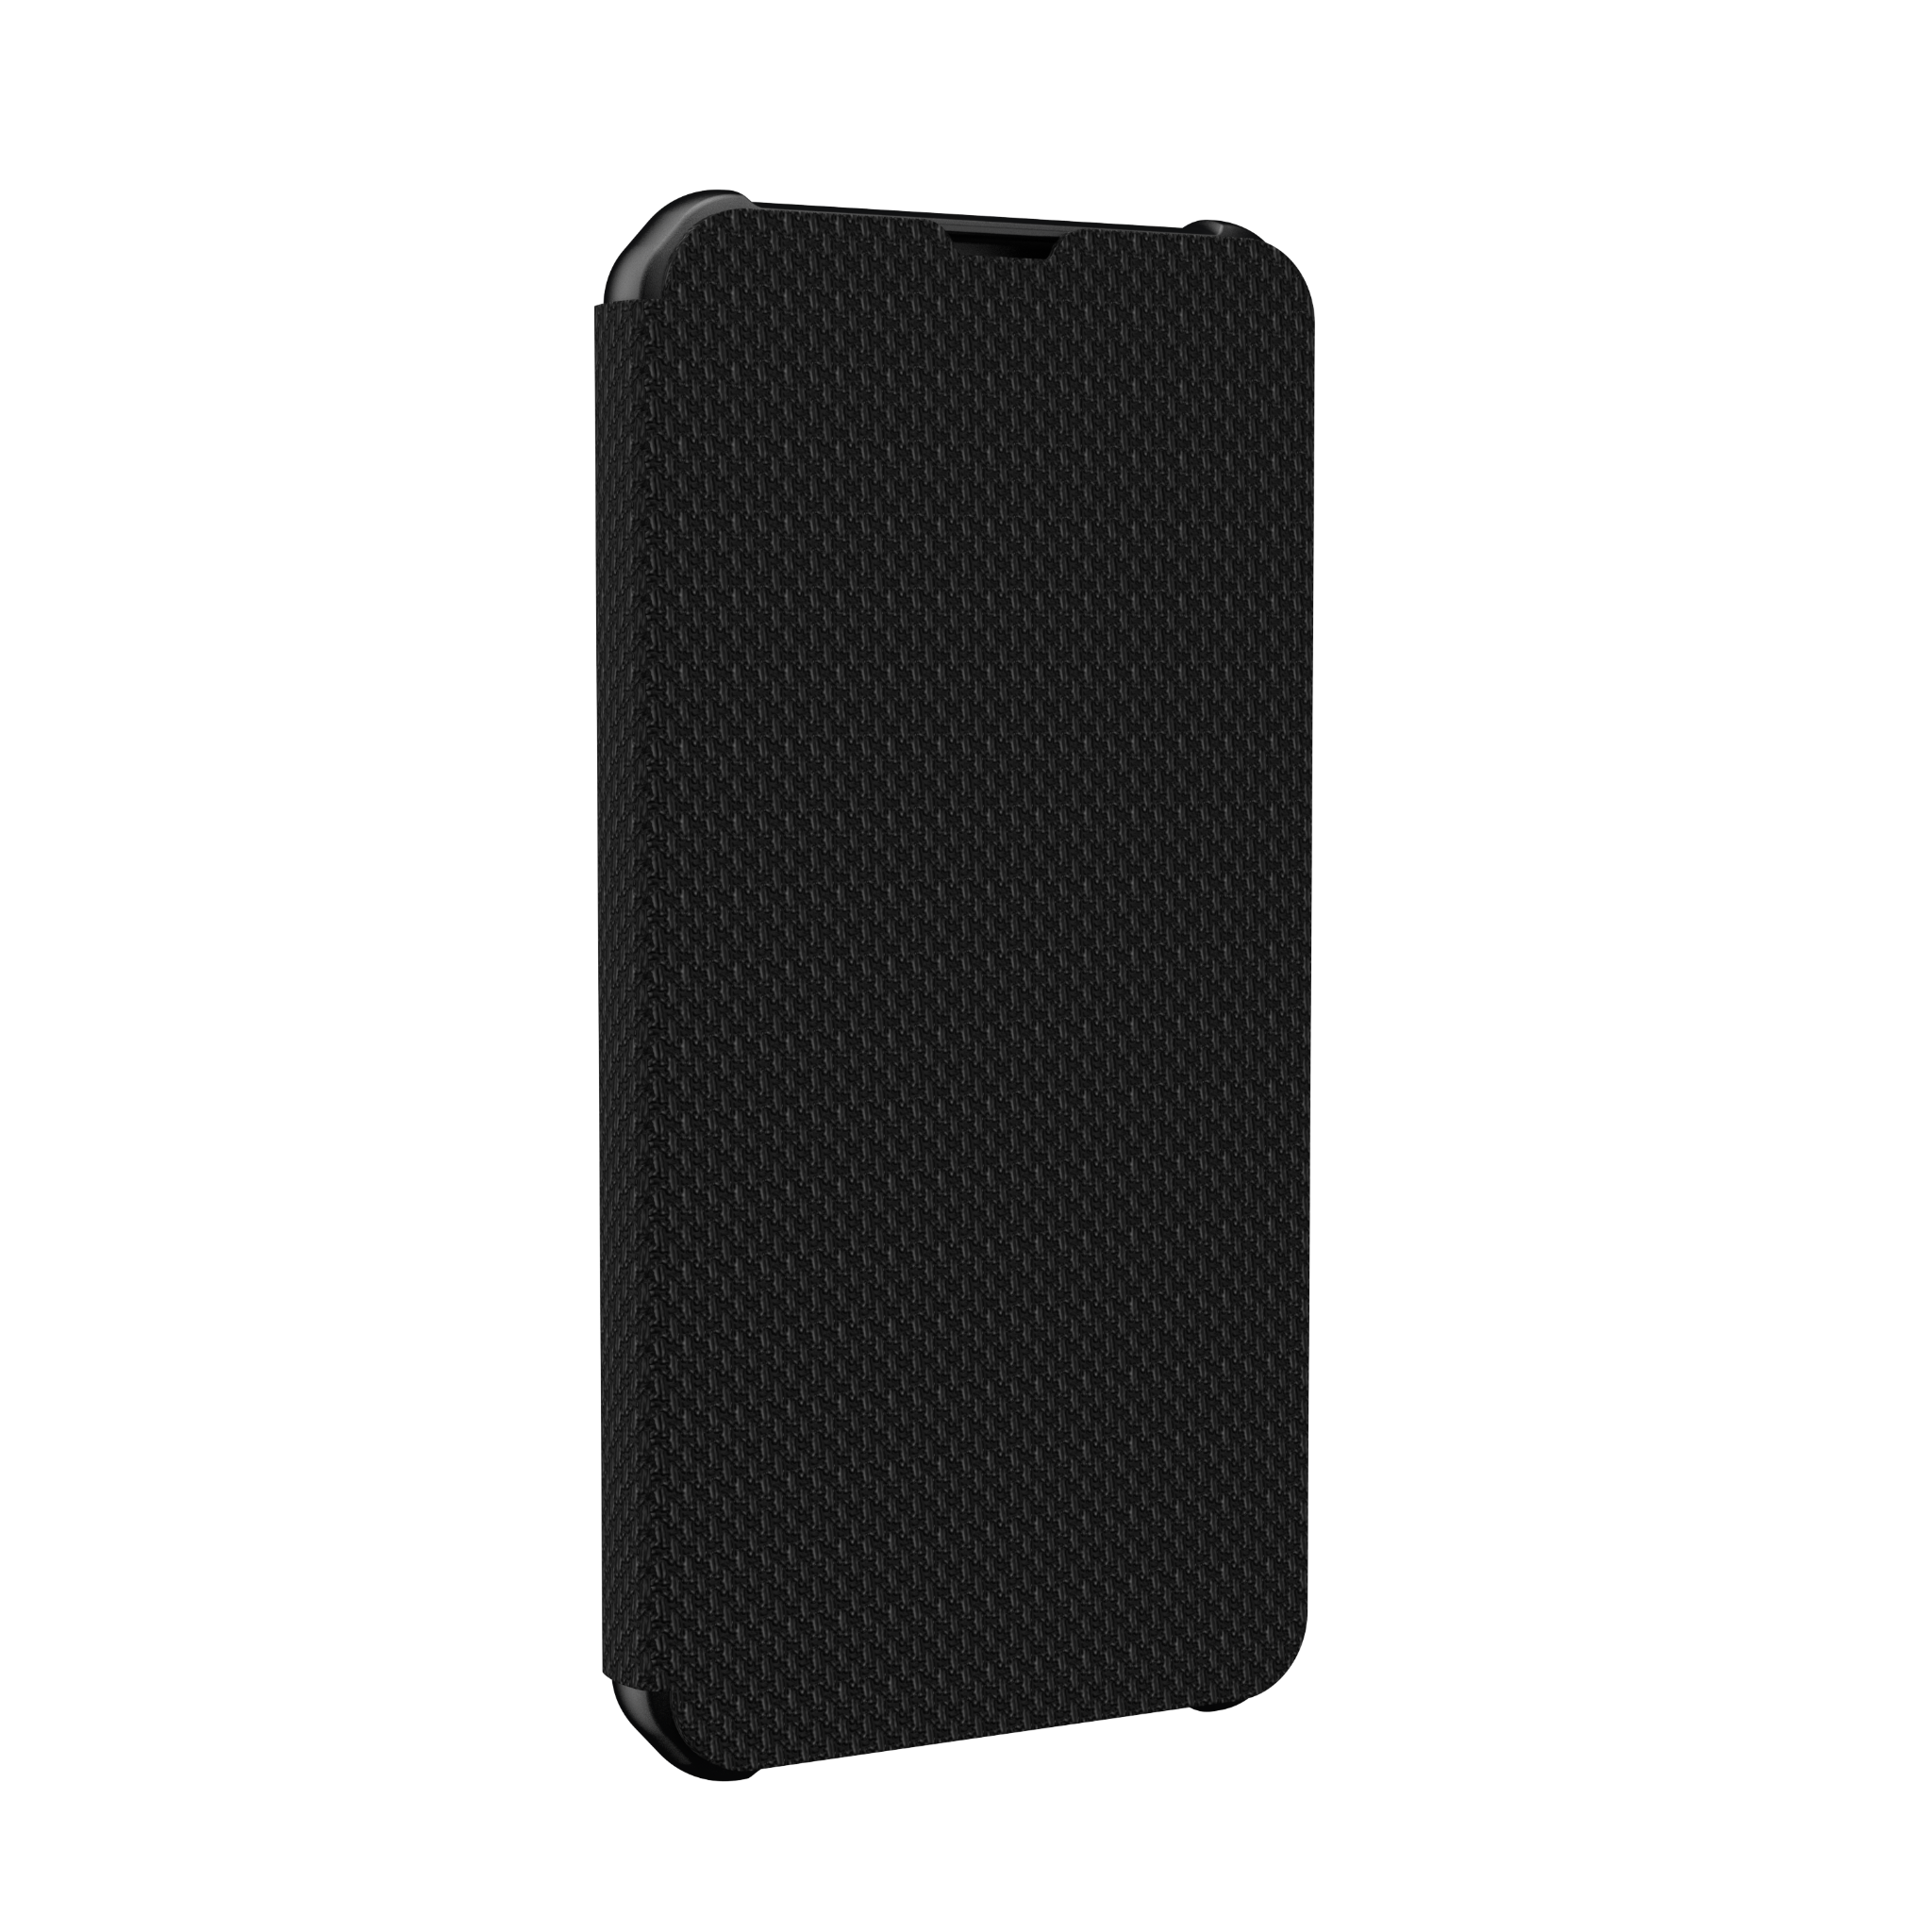  Ốp lưng Metropolis cho iPhone 13 Pro Max [6.7 inch] 